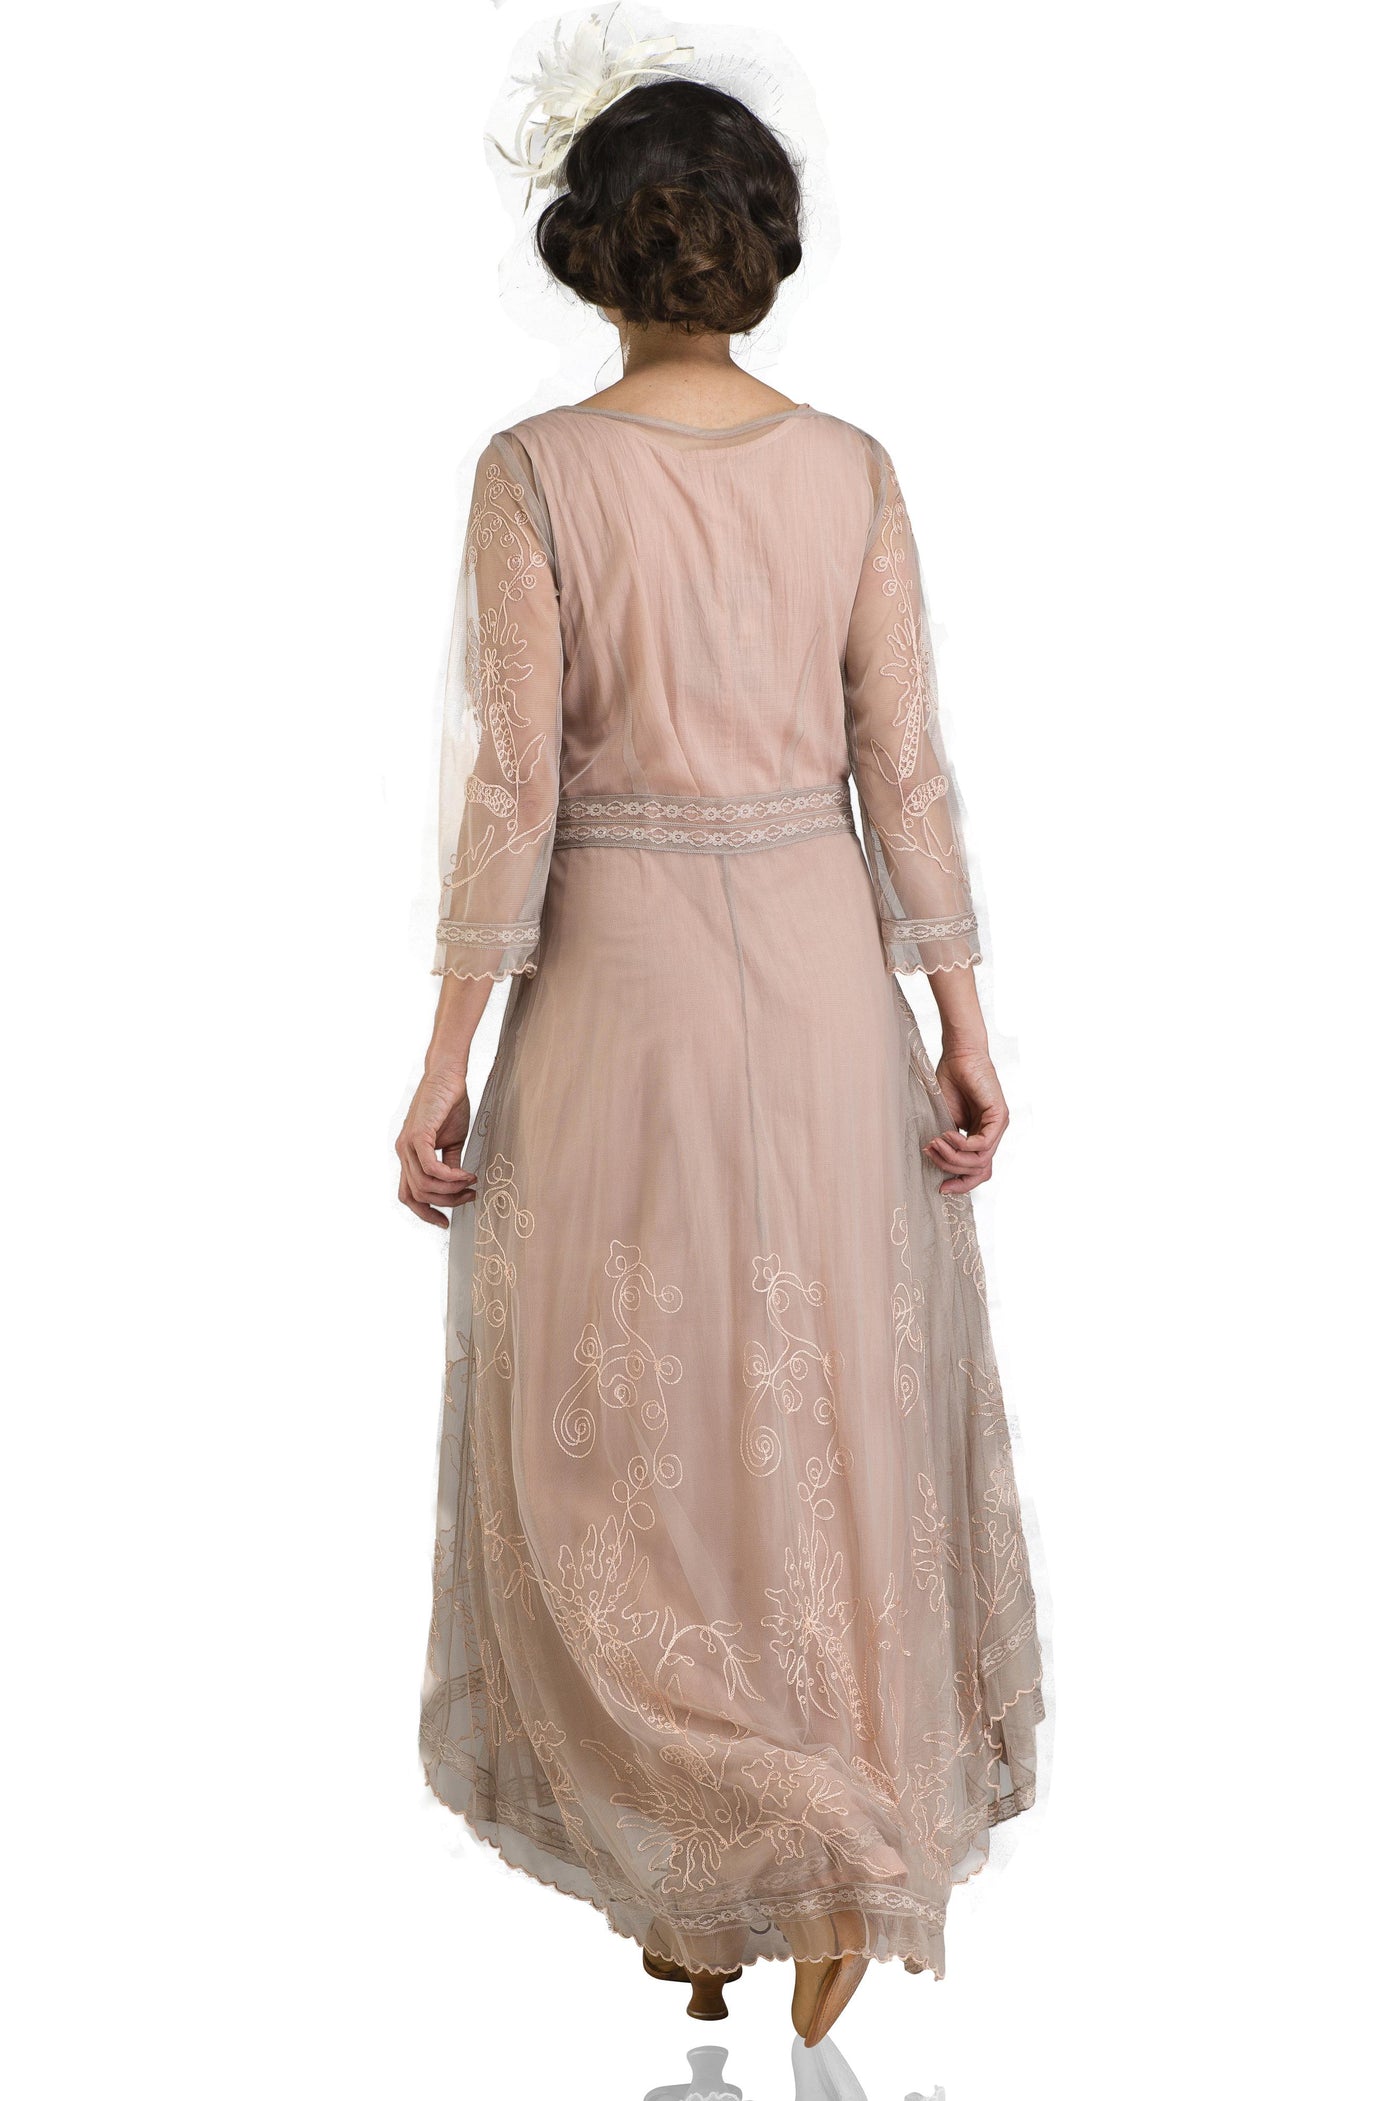 Downton Abbey Tea Party Gown 40163 in Quartz by Nataya